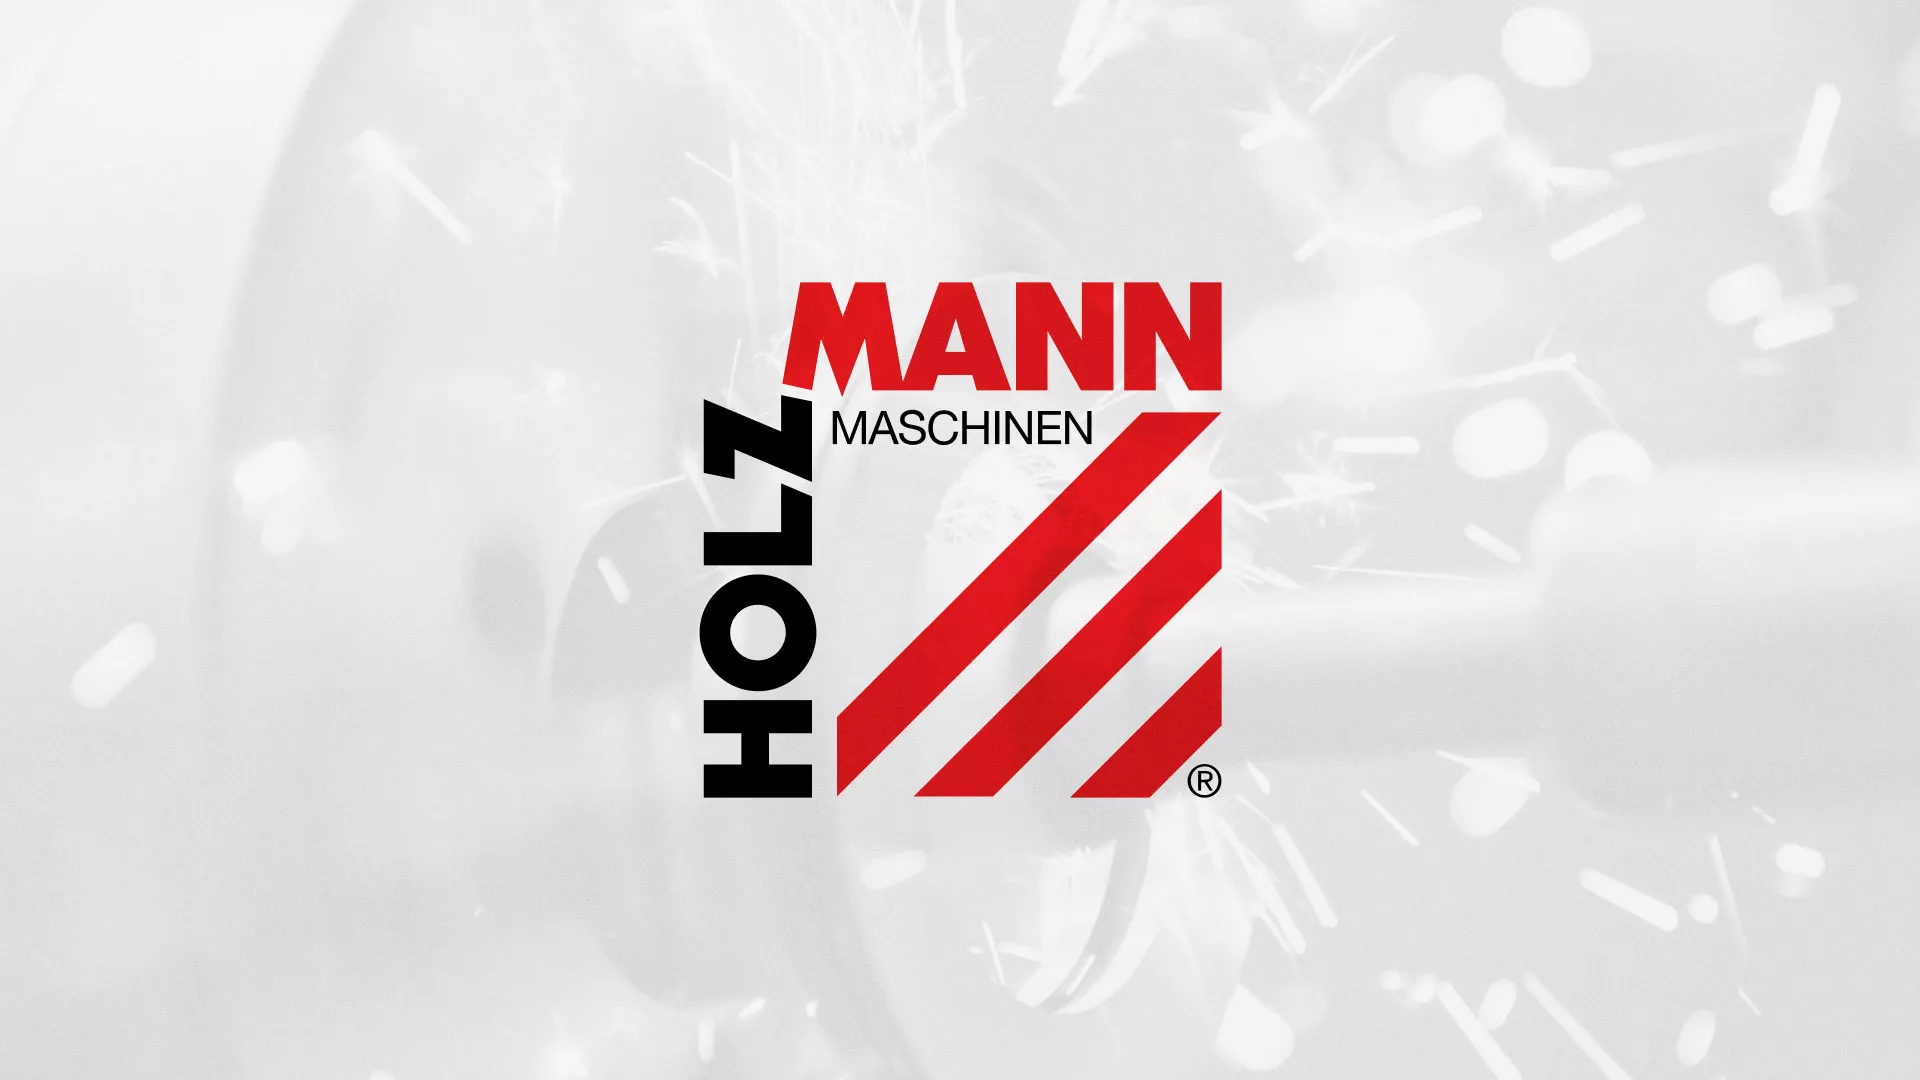 Создание сайта компании «HOLZMANN Maschinen GmbH» в Анжеро-Судженске